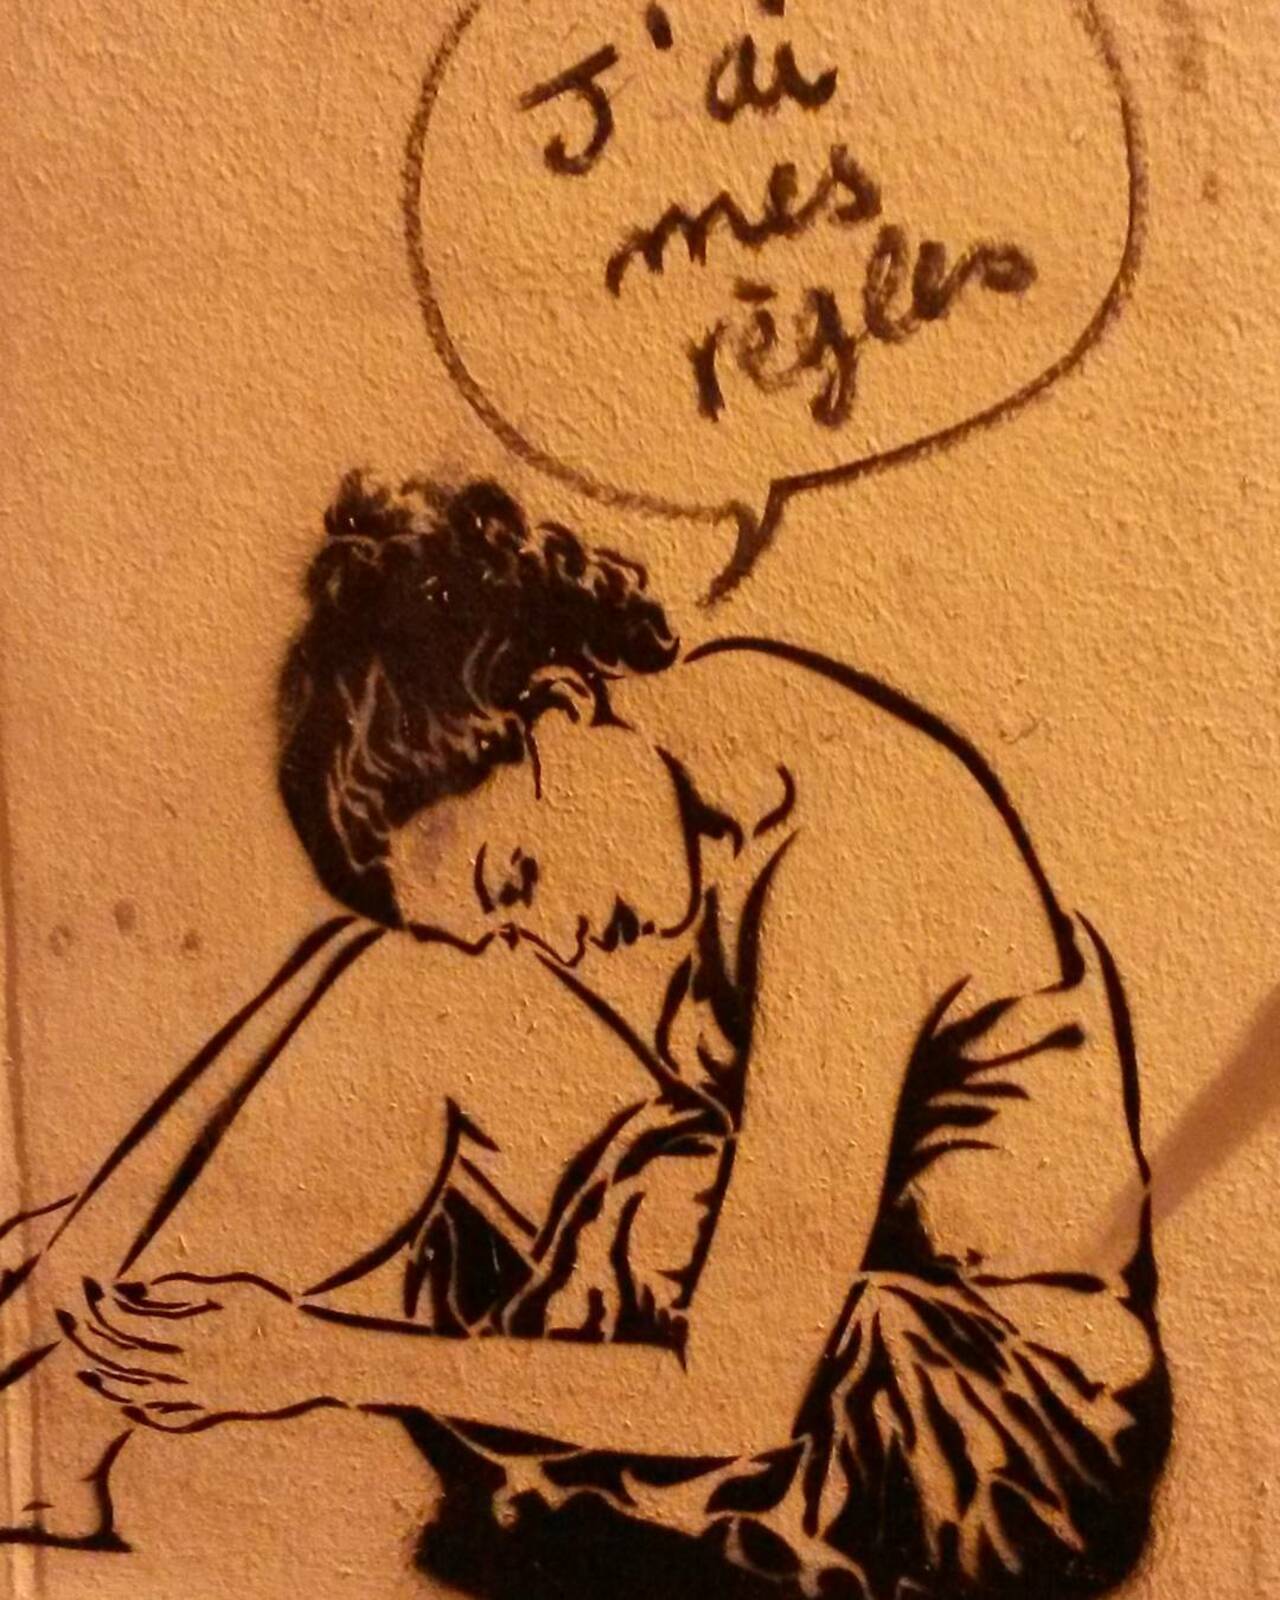 #Paris #graffiti photo by @le_cyclopede http://ift.tt/1O9KuuN #StreetArt http://t.co/exPC3NcvmX